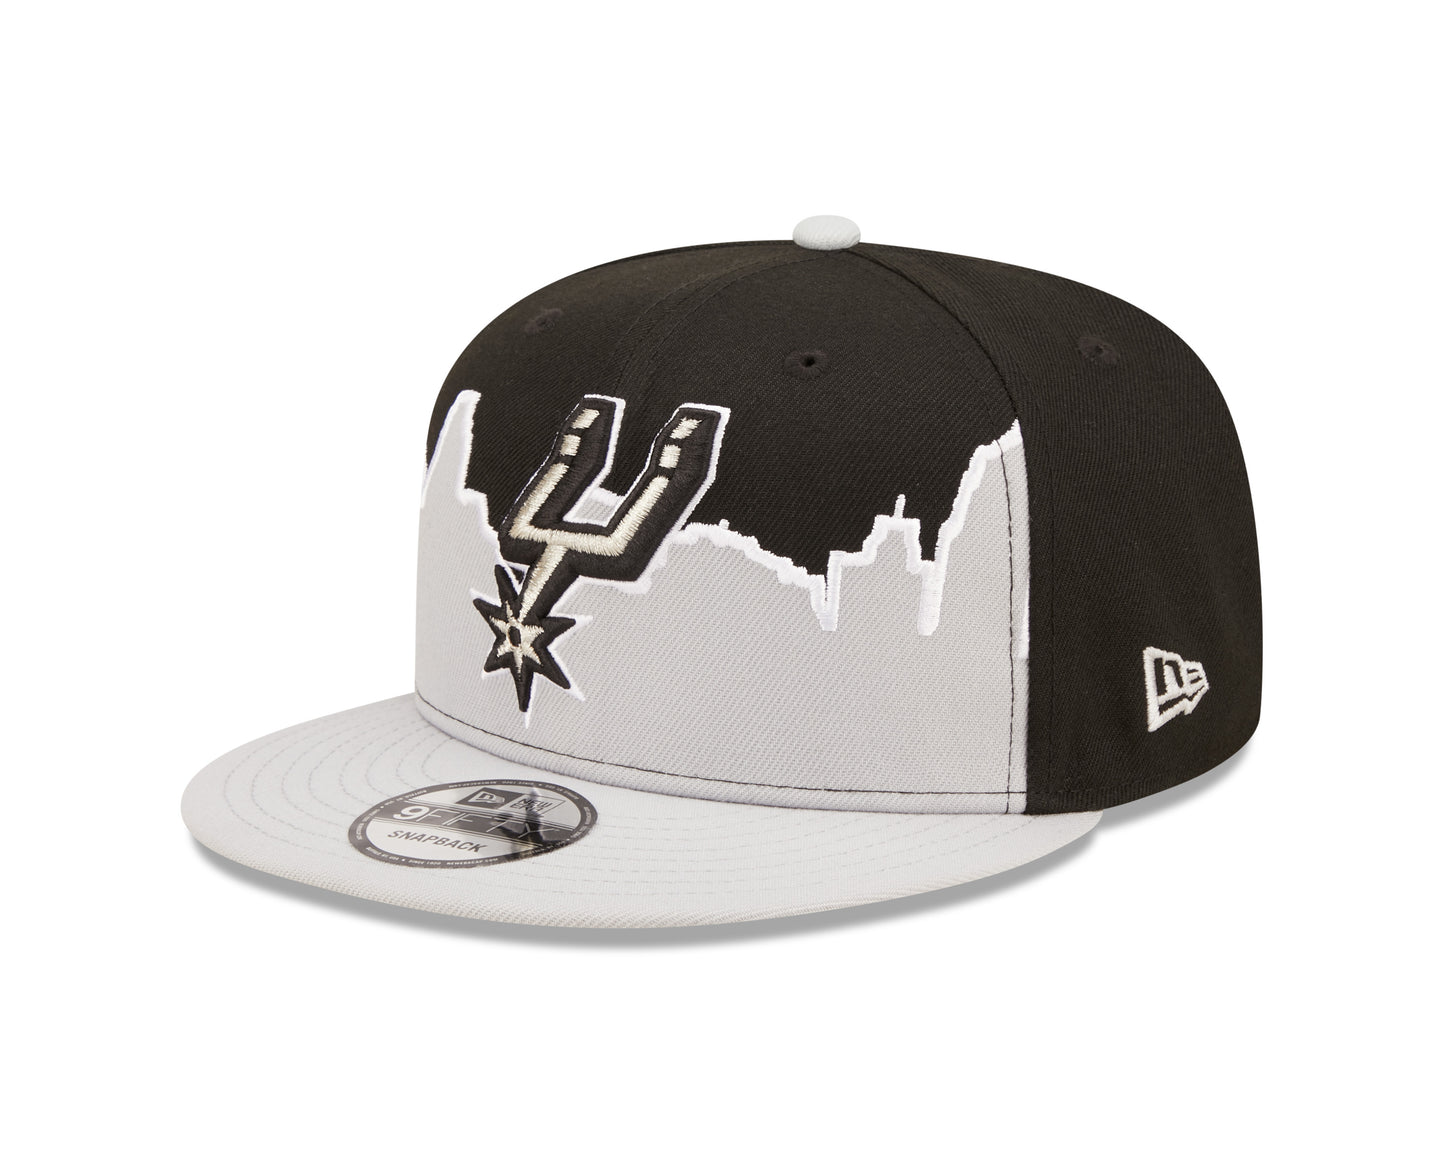 San Antonio Spurs New Era Tip-Off 9FIFTY Snap Back Hat - Gray/Black